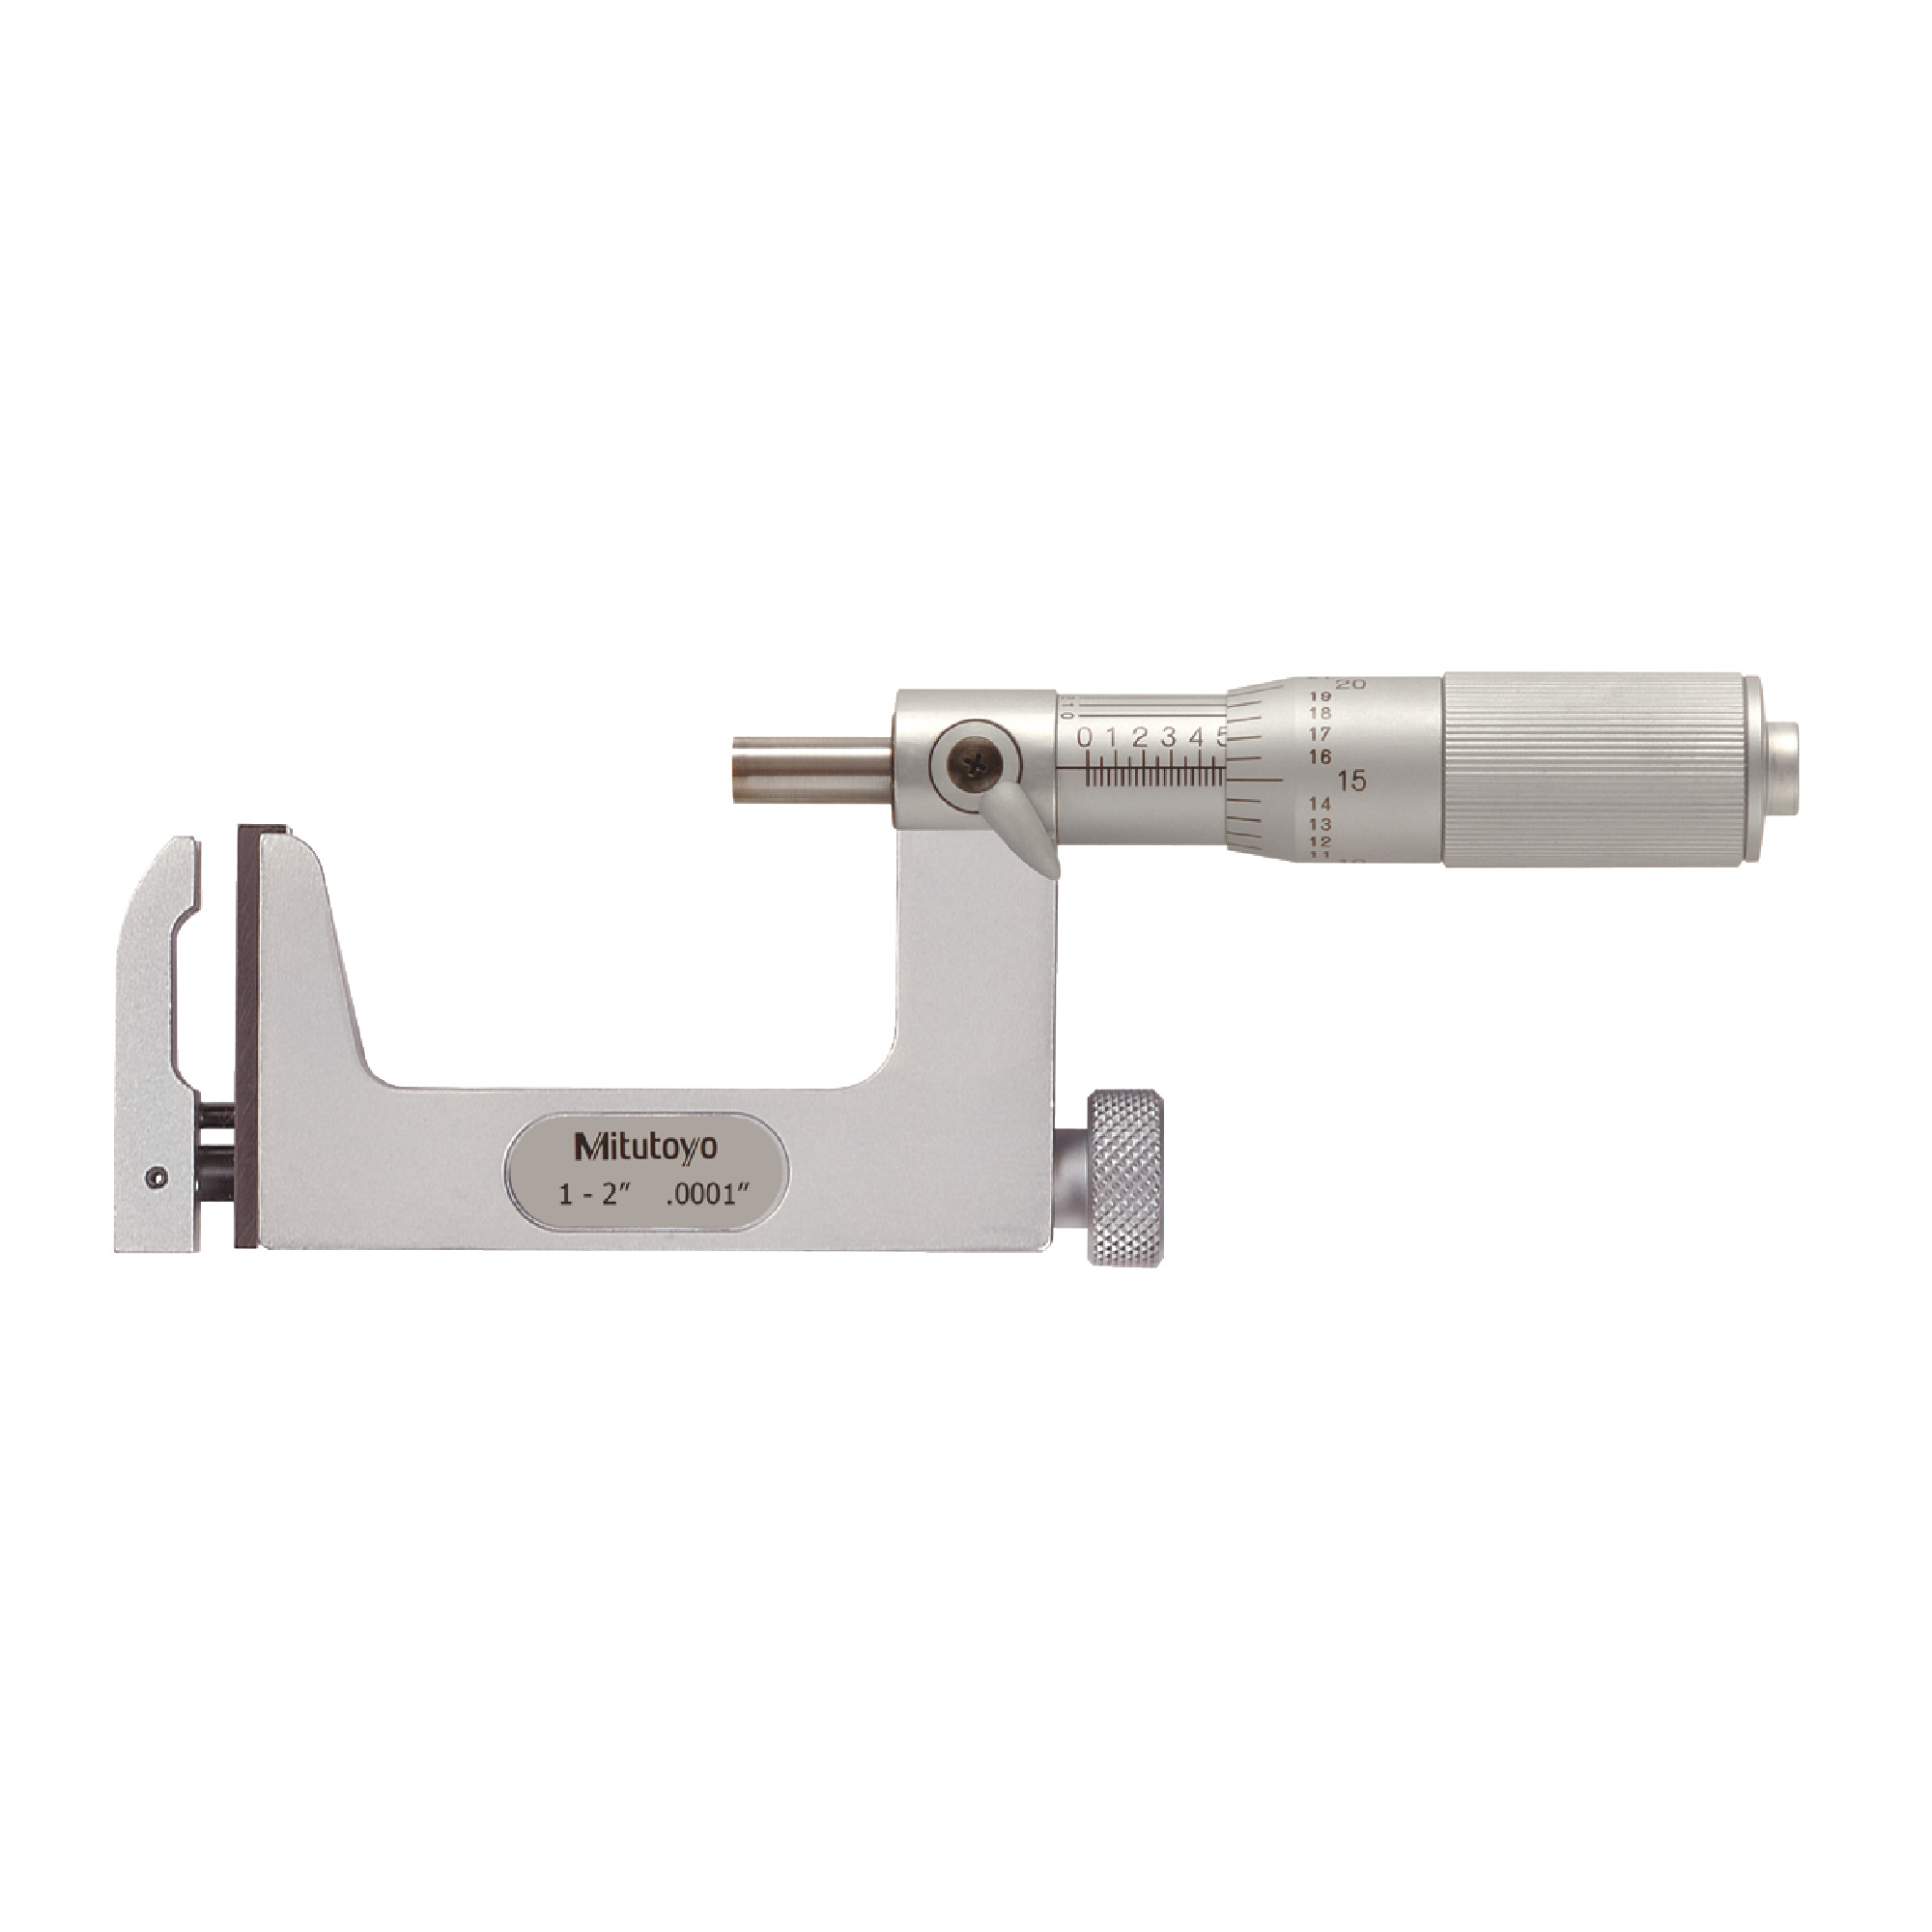 Uni-Mike Interchangeable Multi-Anvil Micrometer